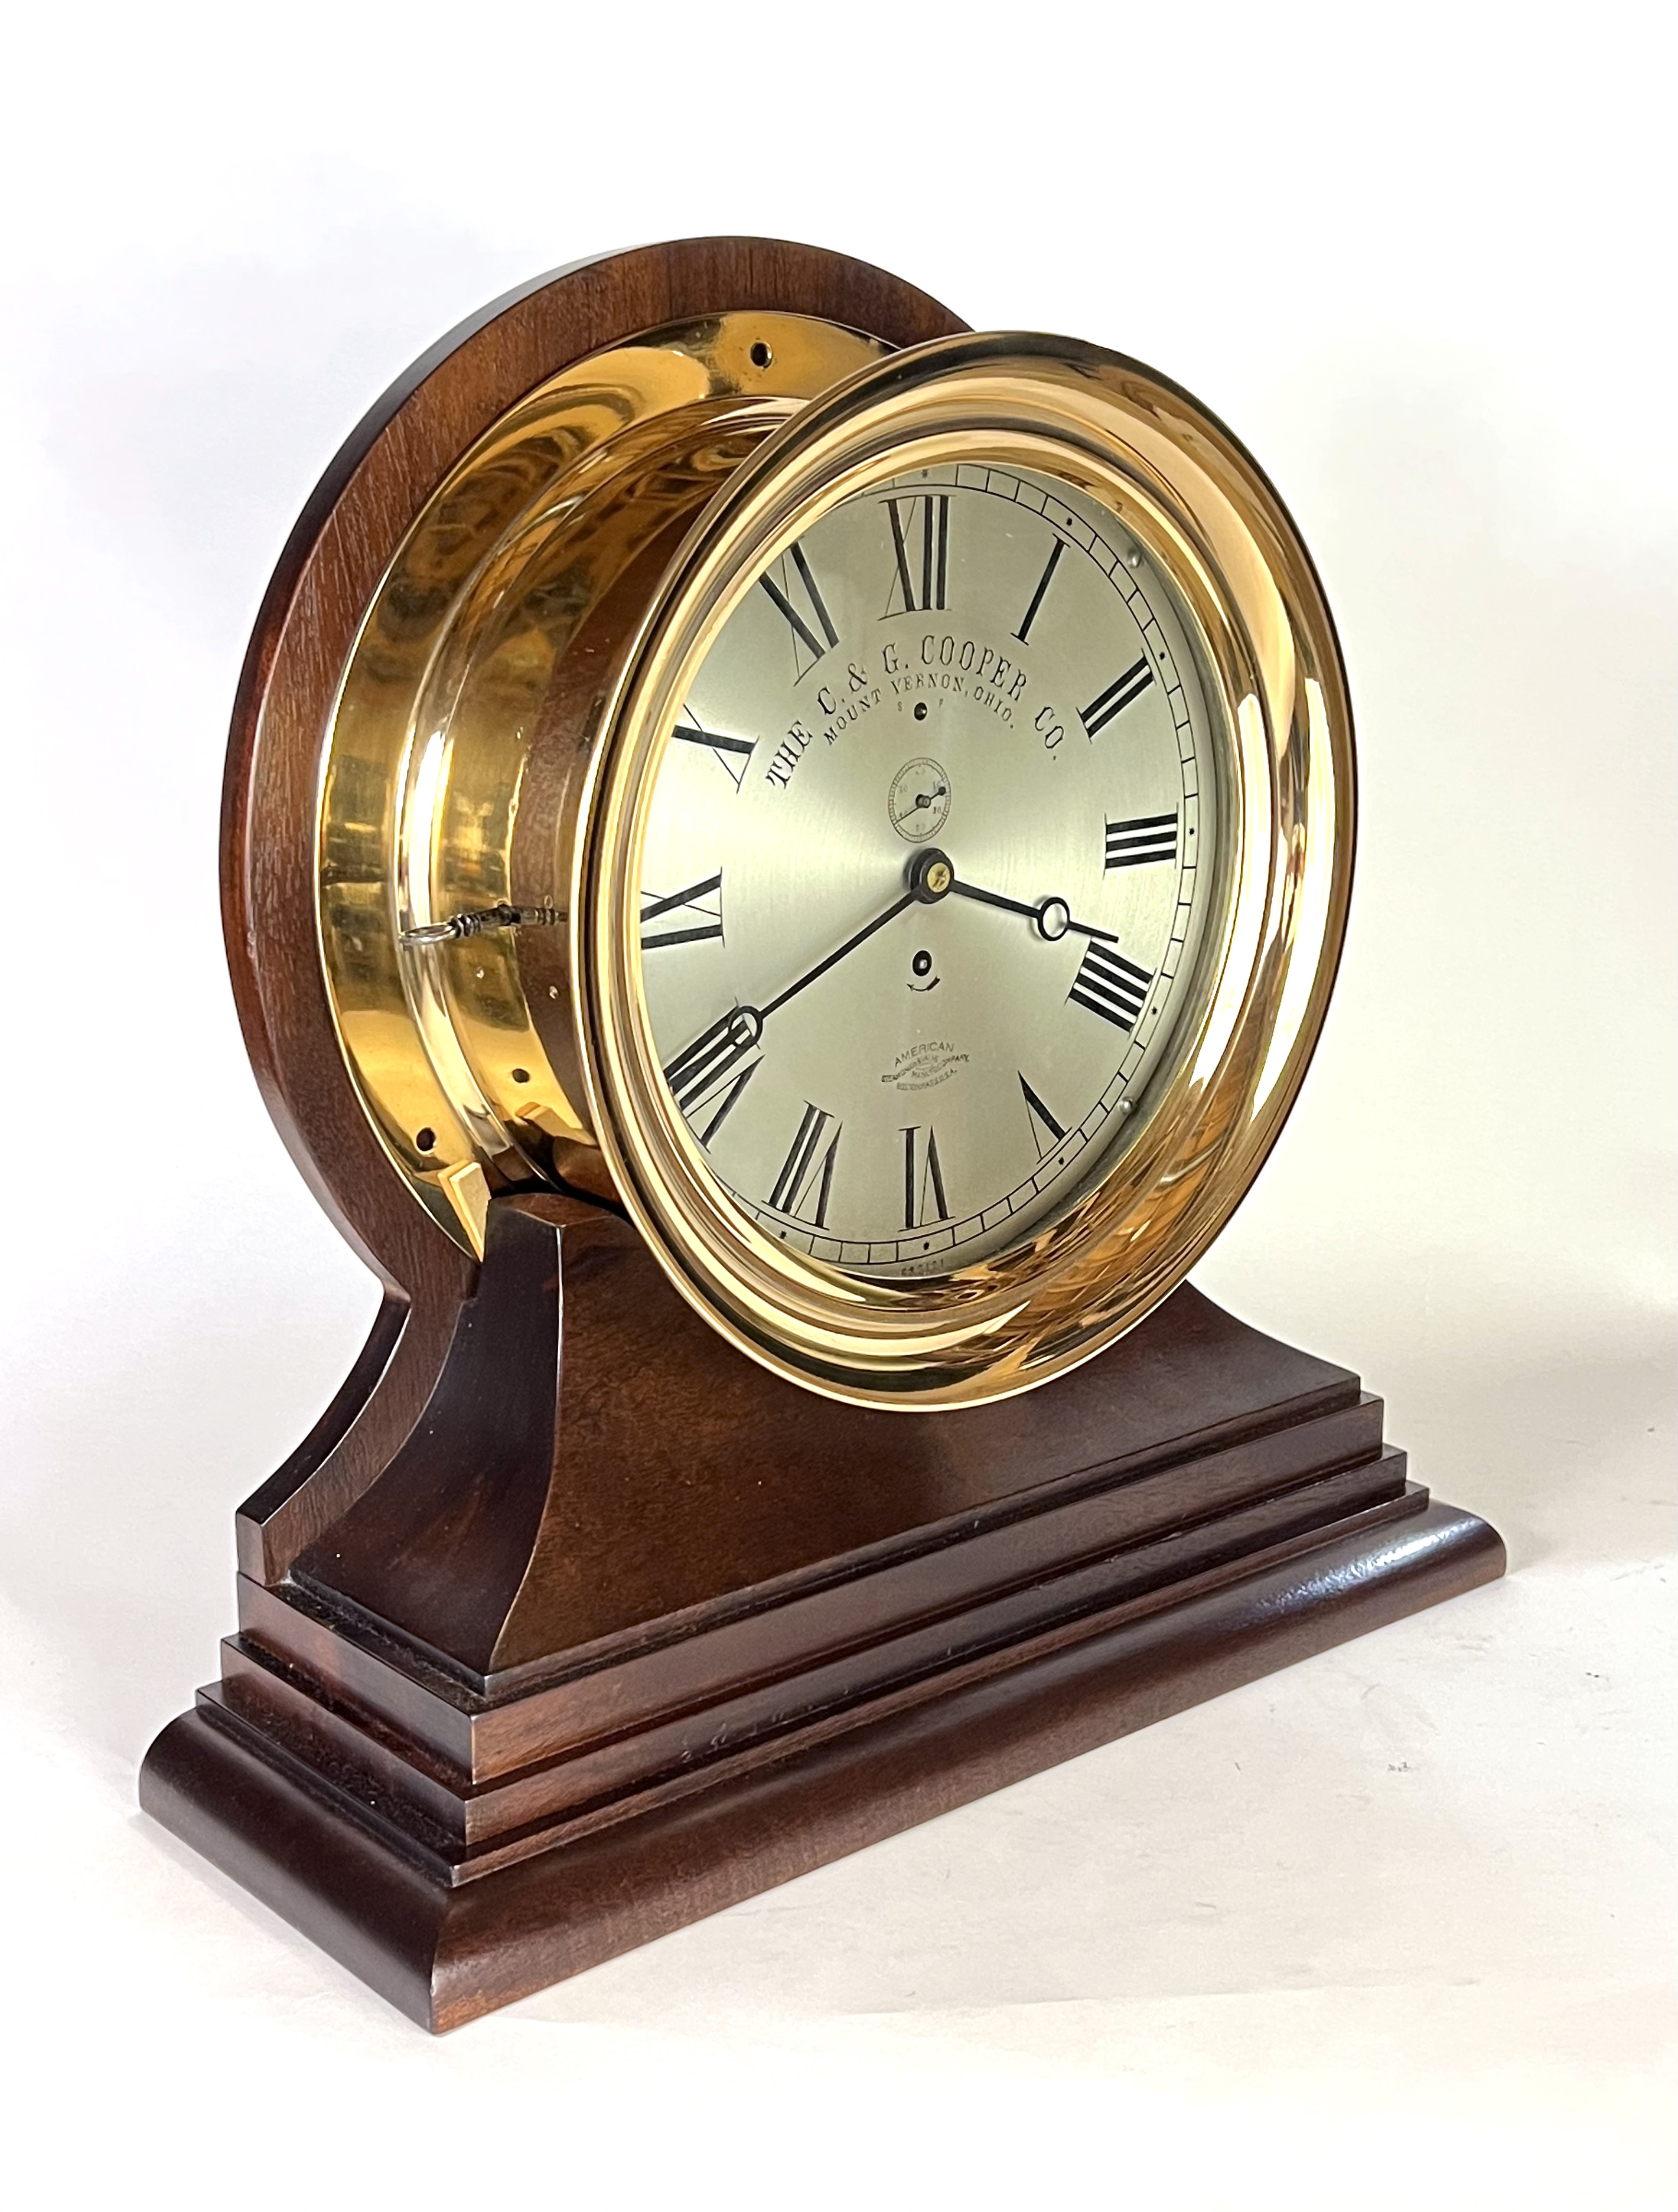 E. Howard 10 inchMarine Clock for C & G Cooper